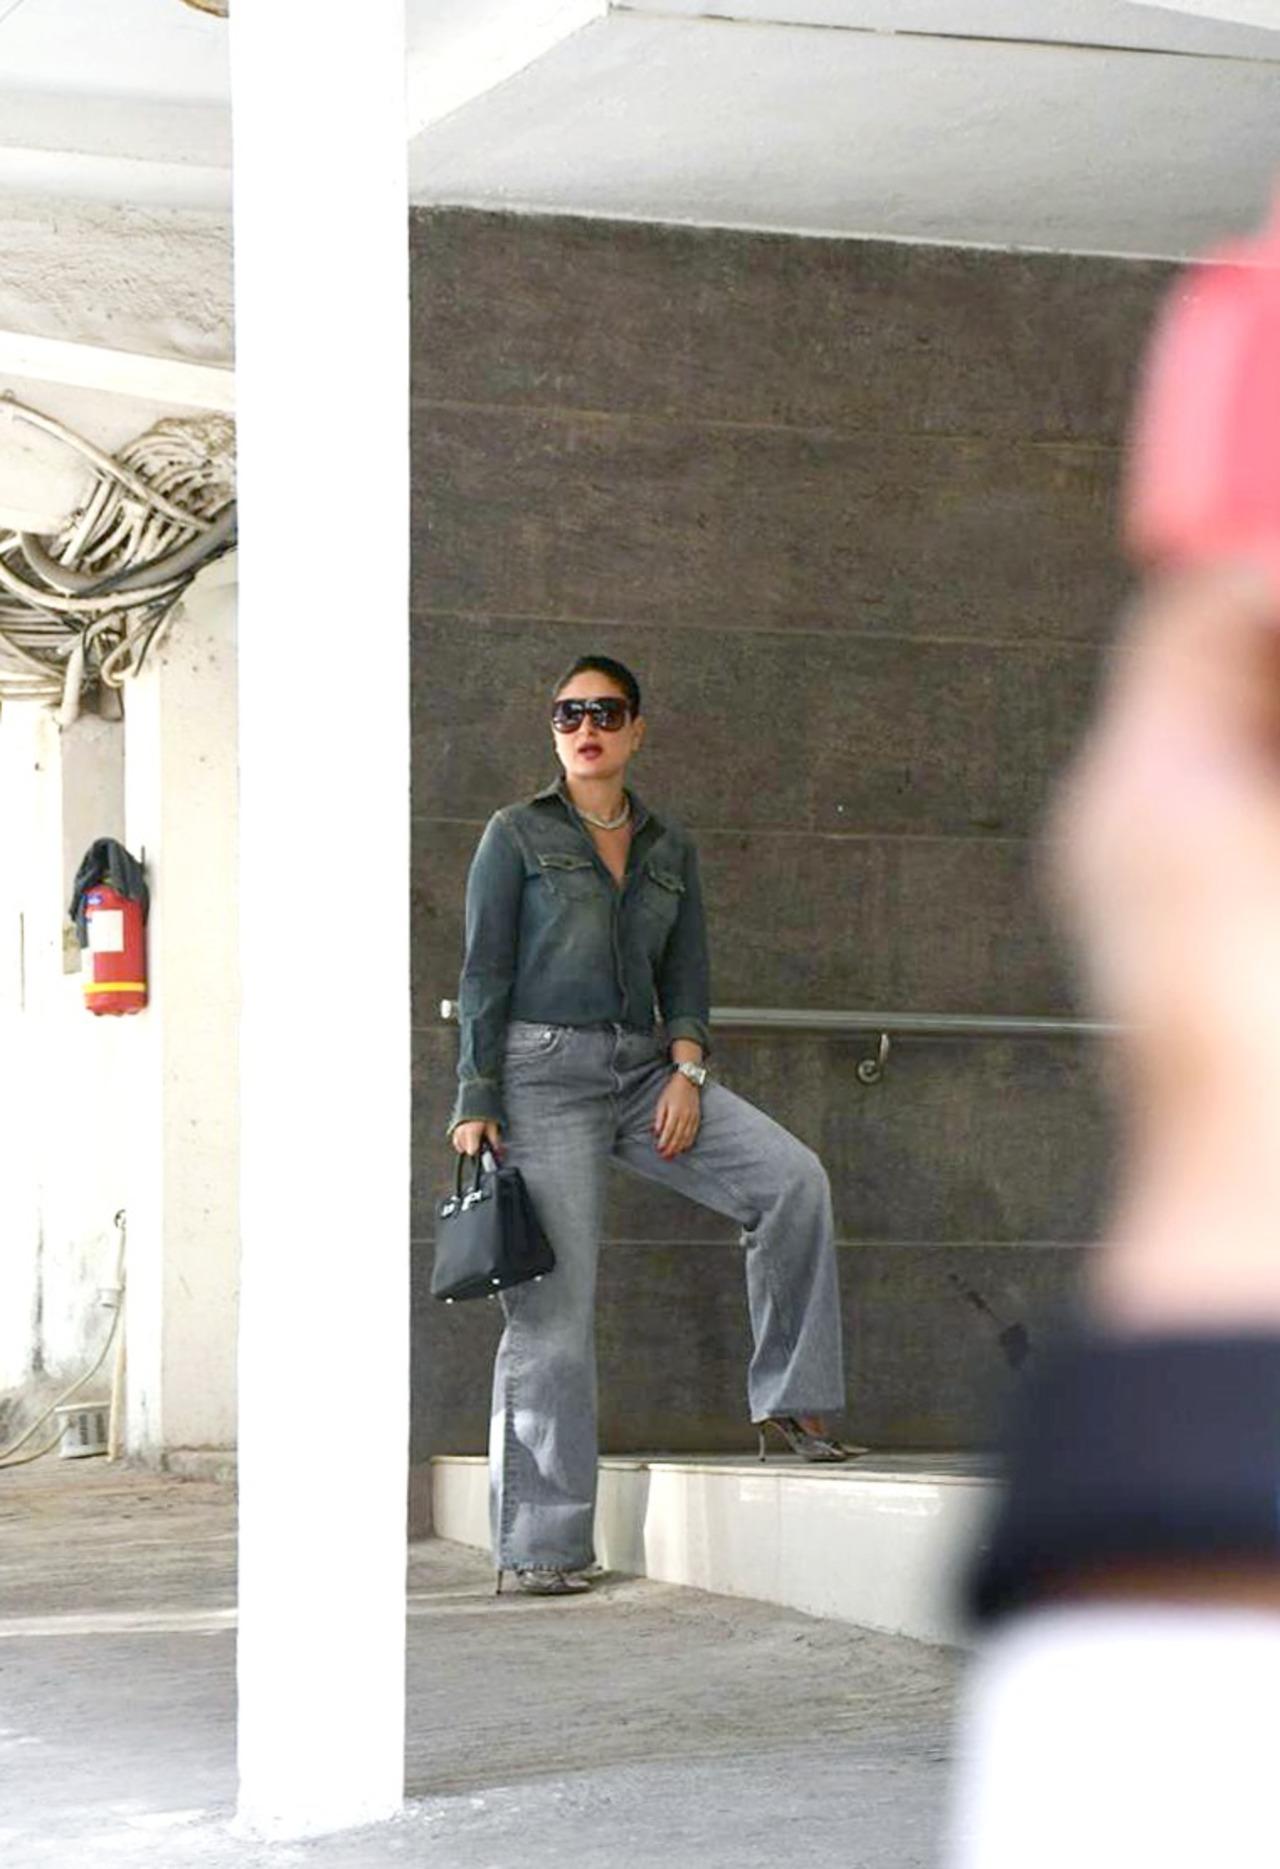 Kareena Kapoor Khan was spotted in the city rocking a denim-on-denim look